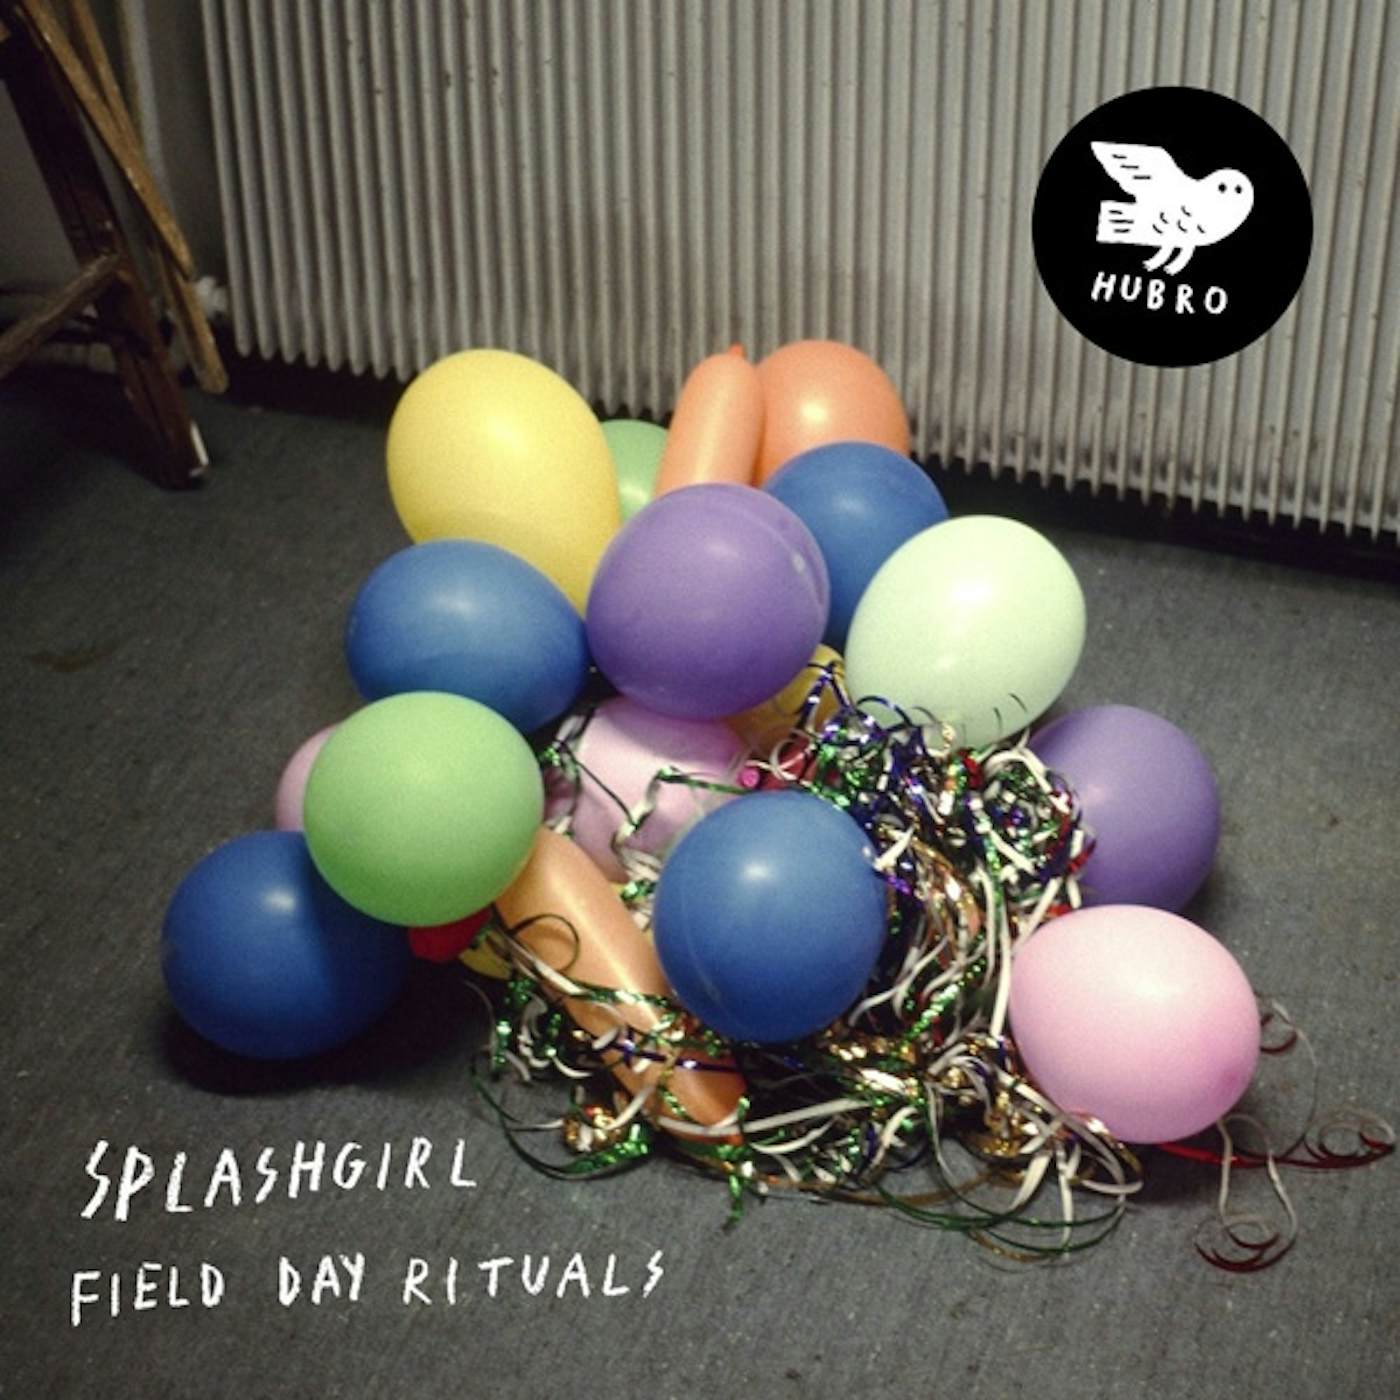 Splashgirl Field Day Rituals Vinyl Record